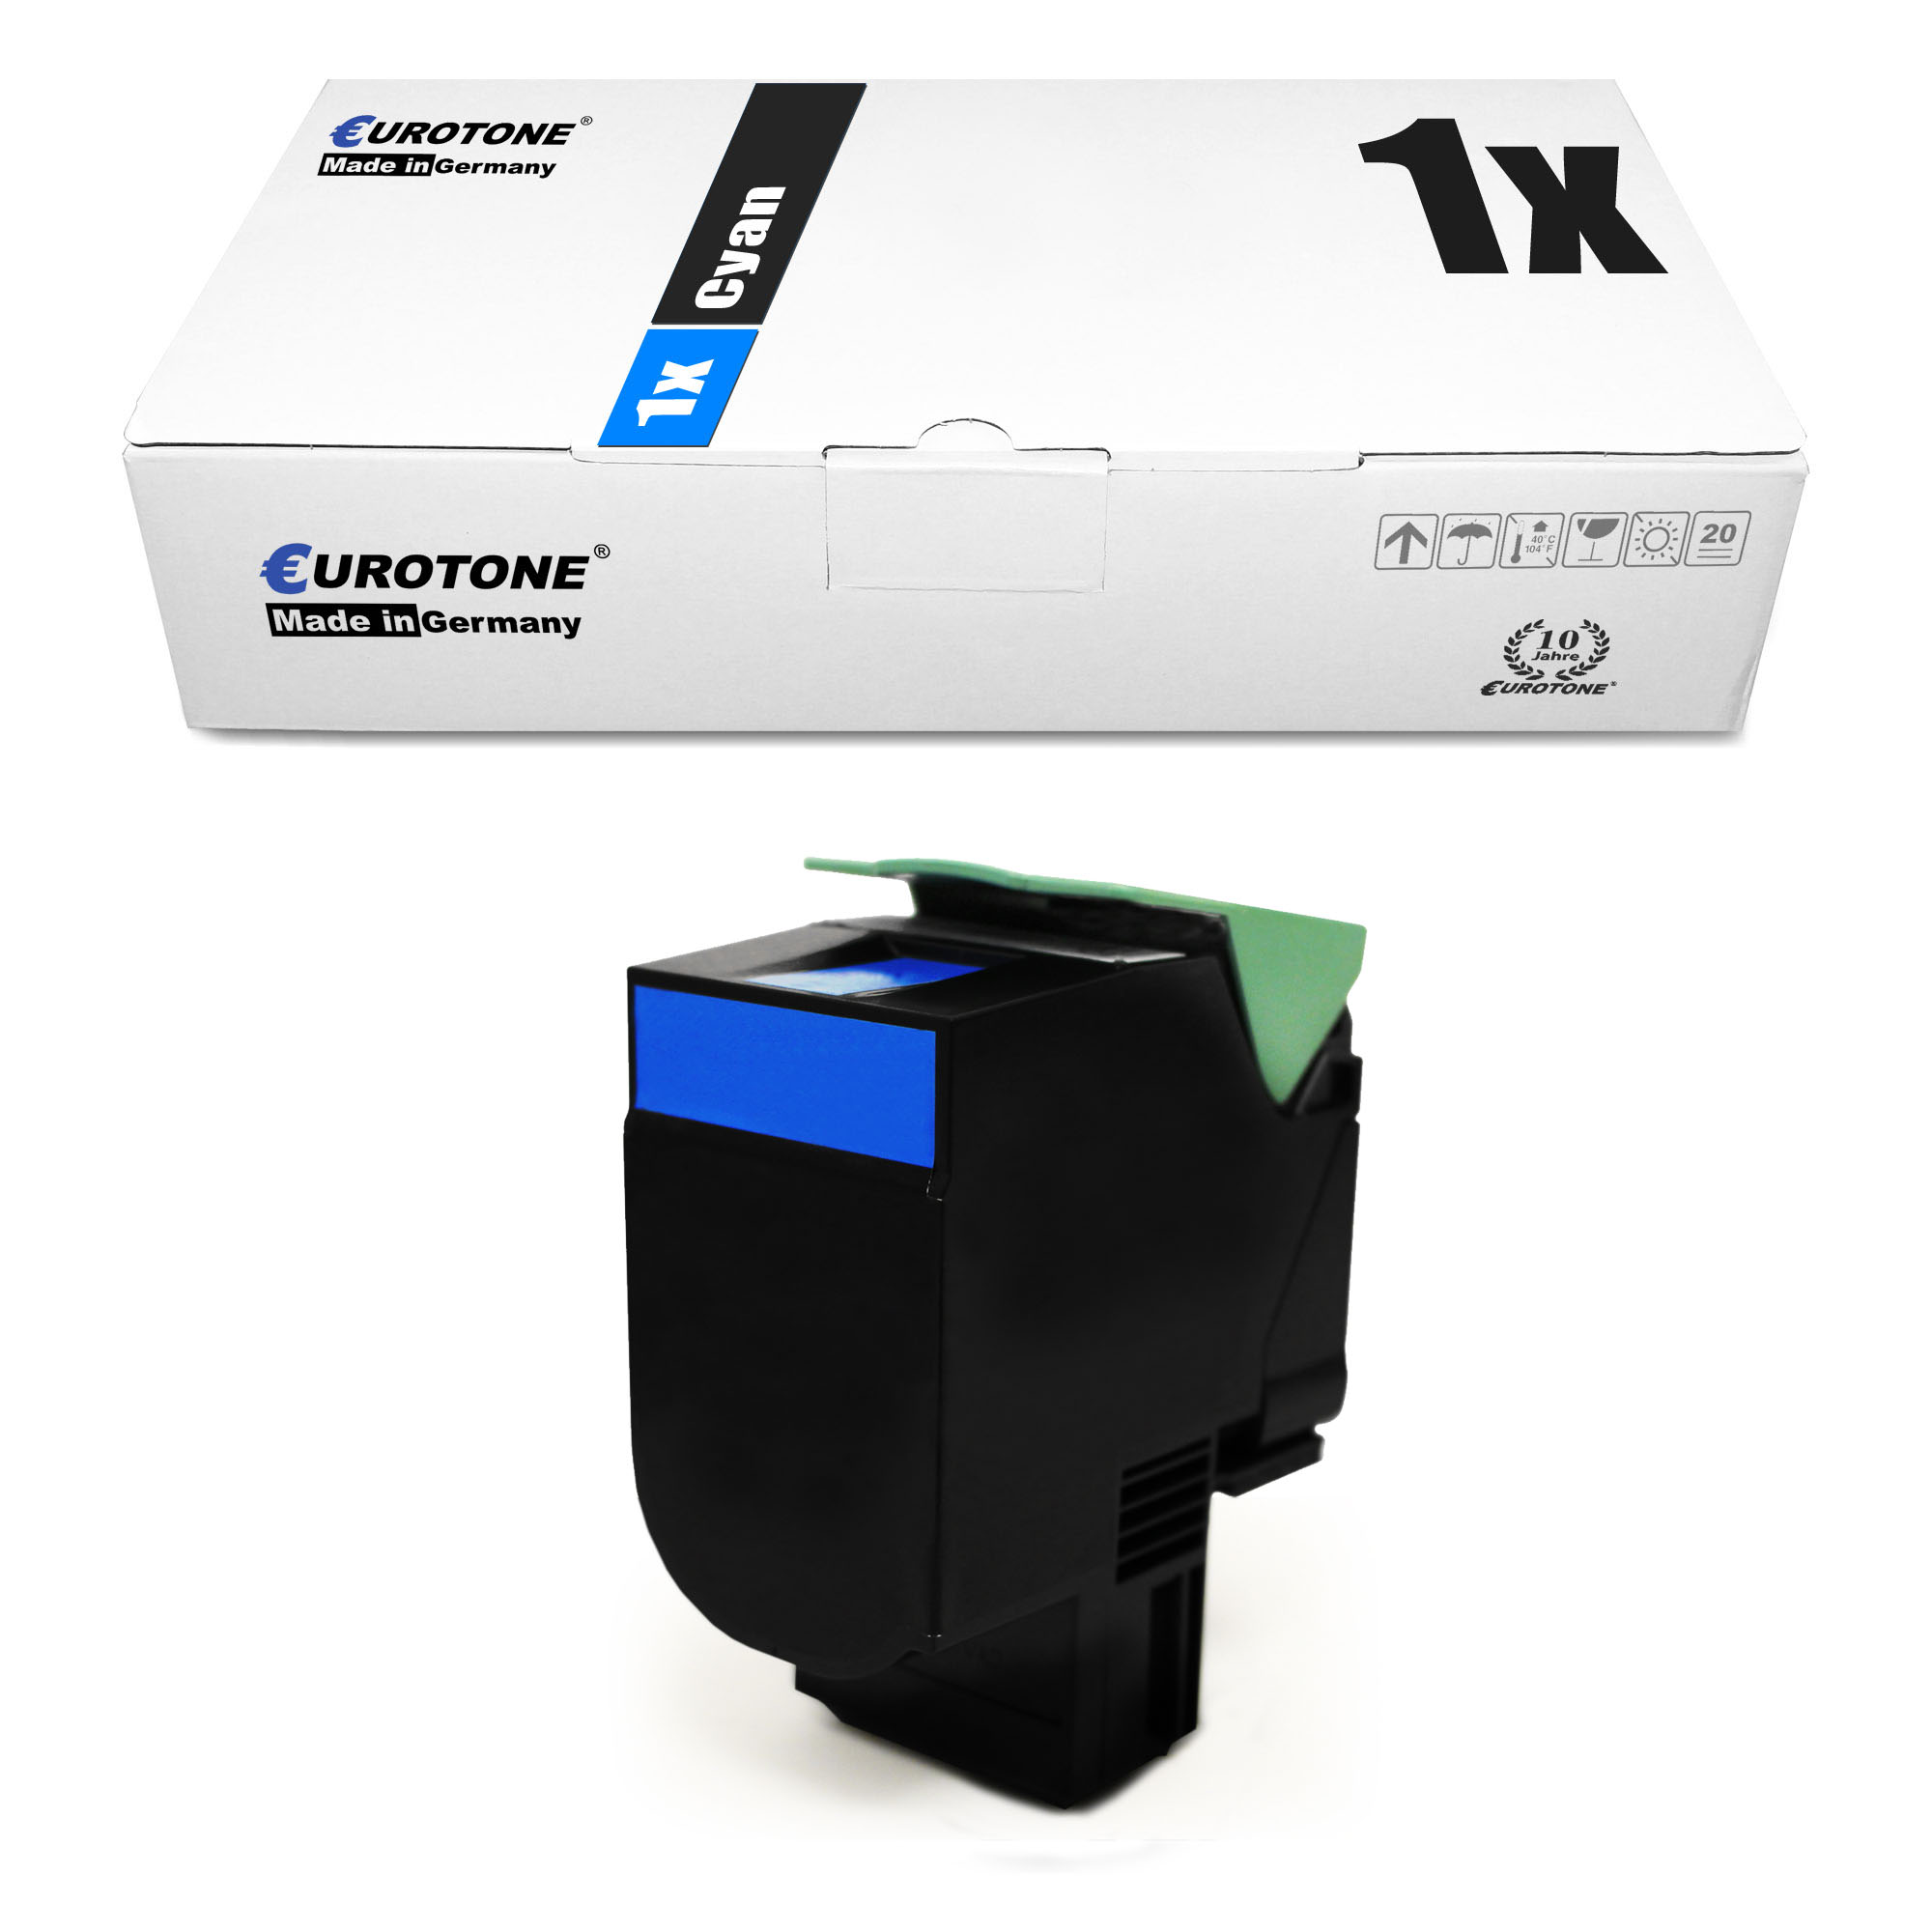 1xC EUROTONE (Lexmark 800X2) Toner 80C0X20 / Cyan CX510de Cartridge